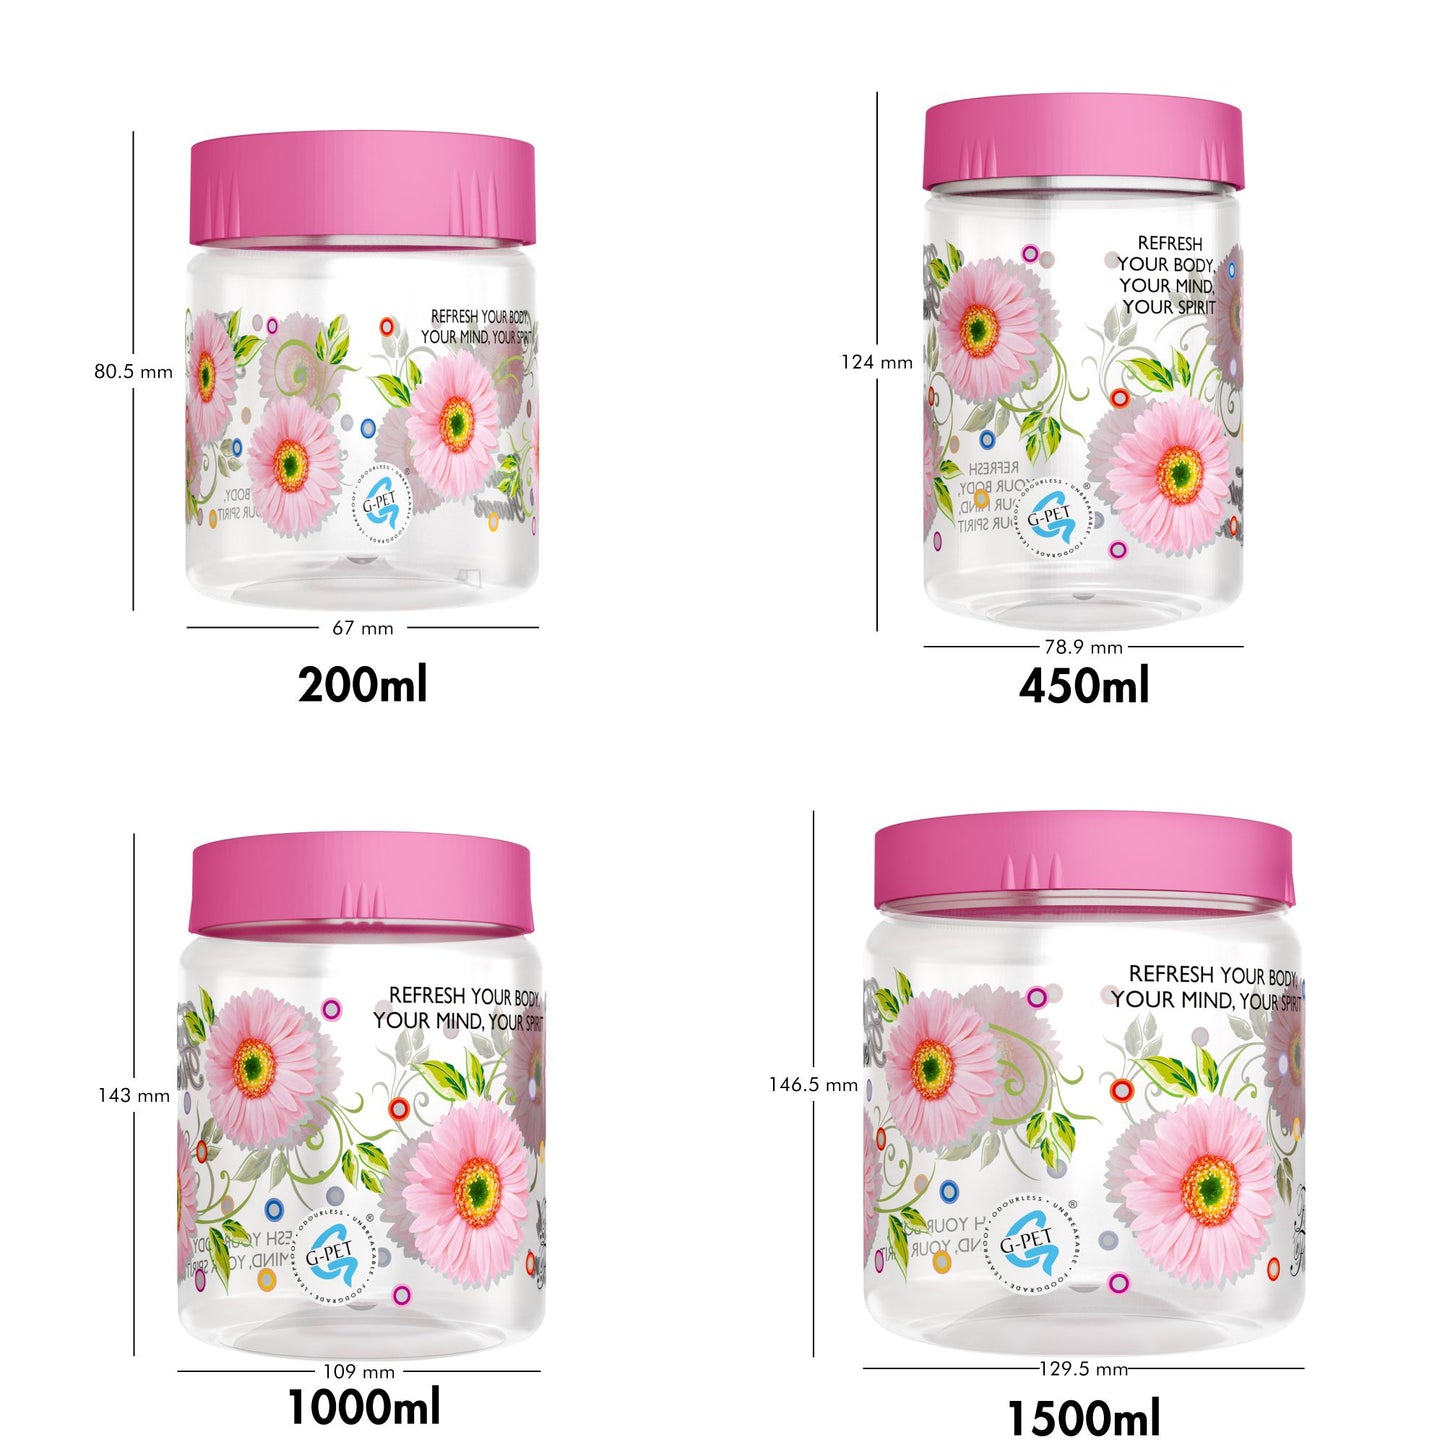 Print Magic Container Pink Pack of 12- 1500ml (3 pcs), 1000ml (3 pcs), 450ml (3 pcs) 200ml (3 pcs)